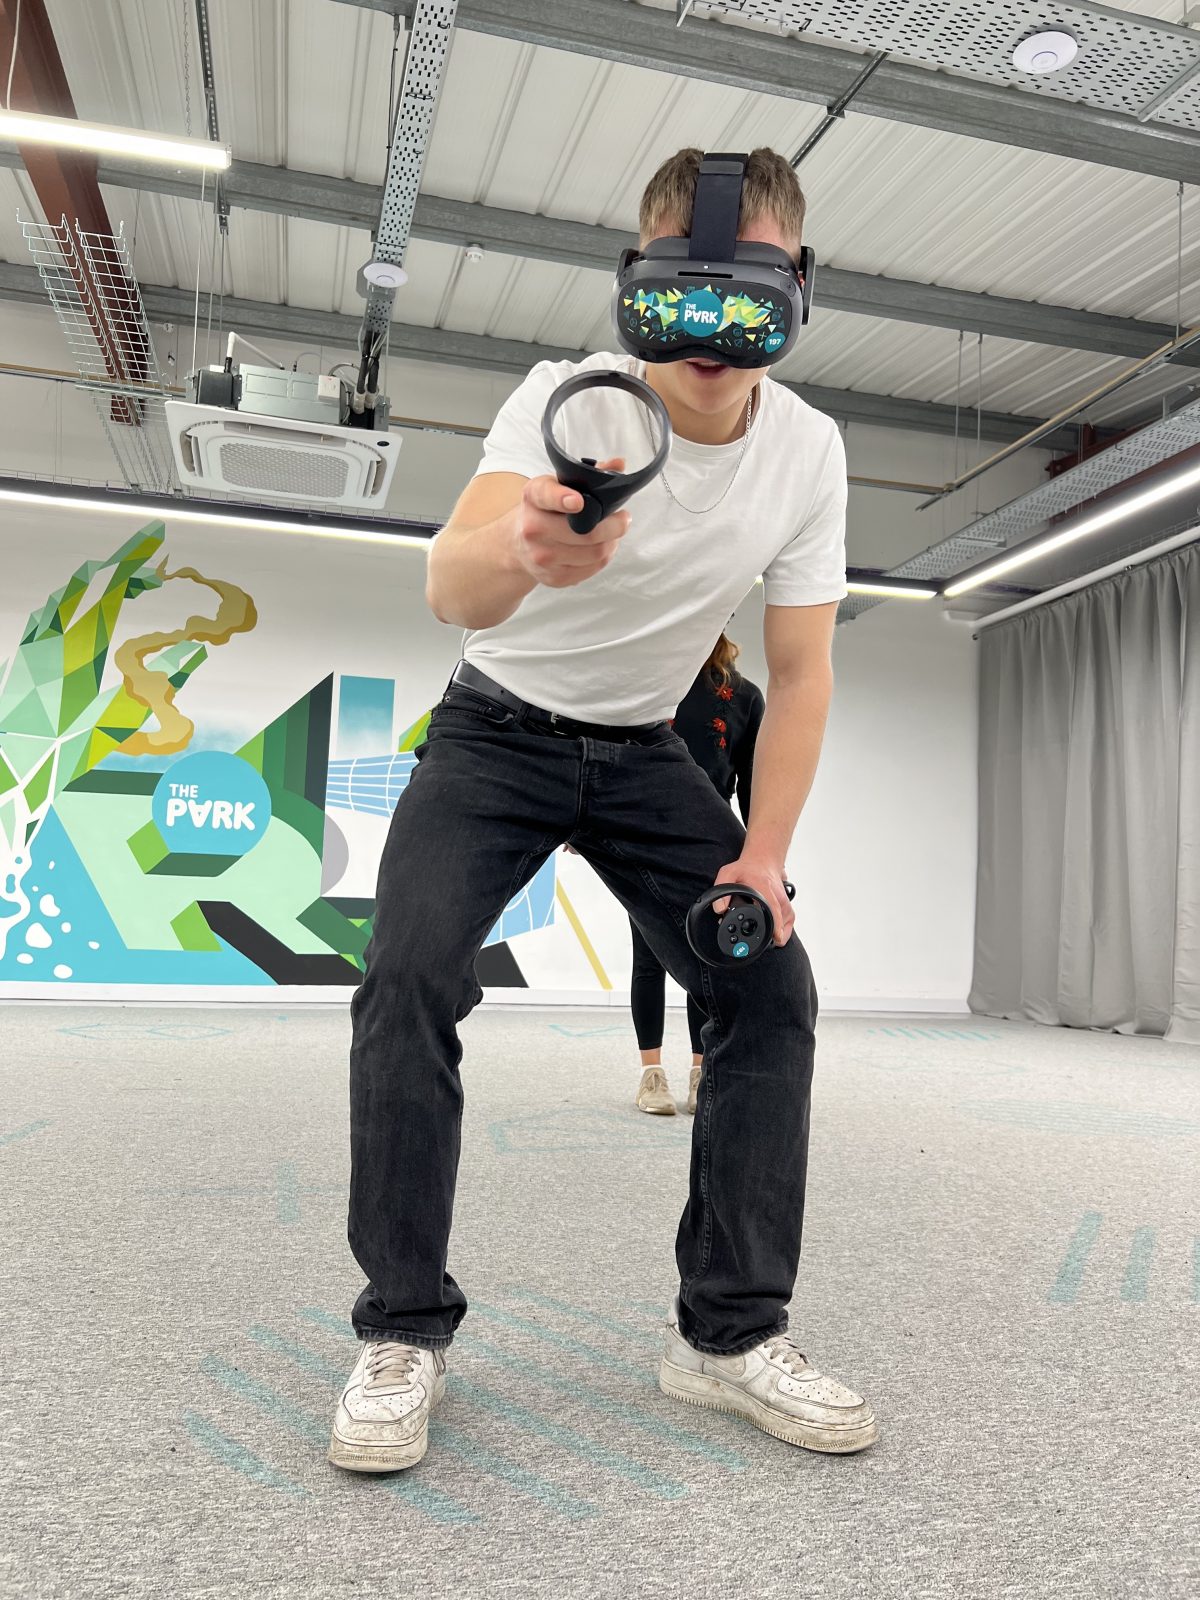 A boy playing a VR game.